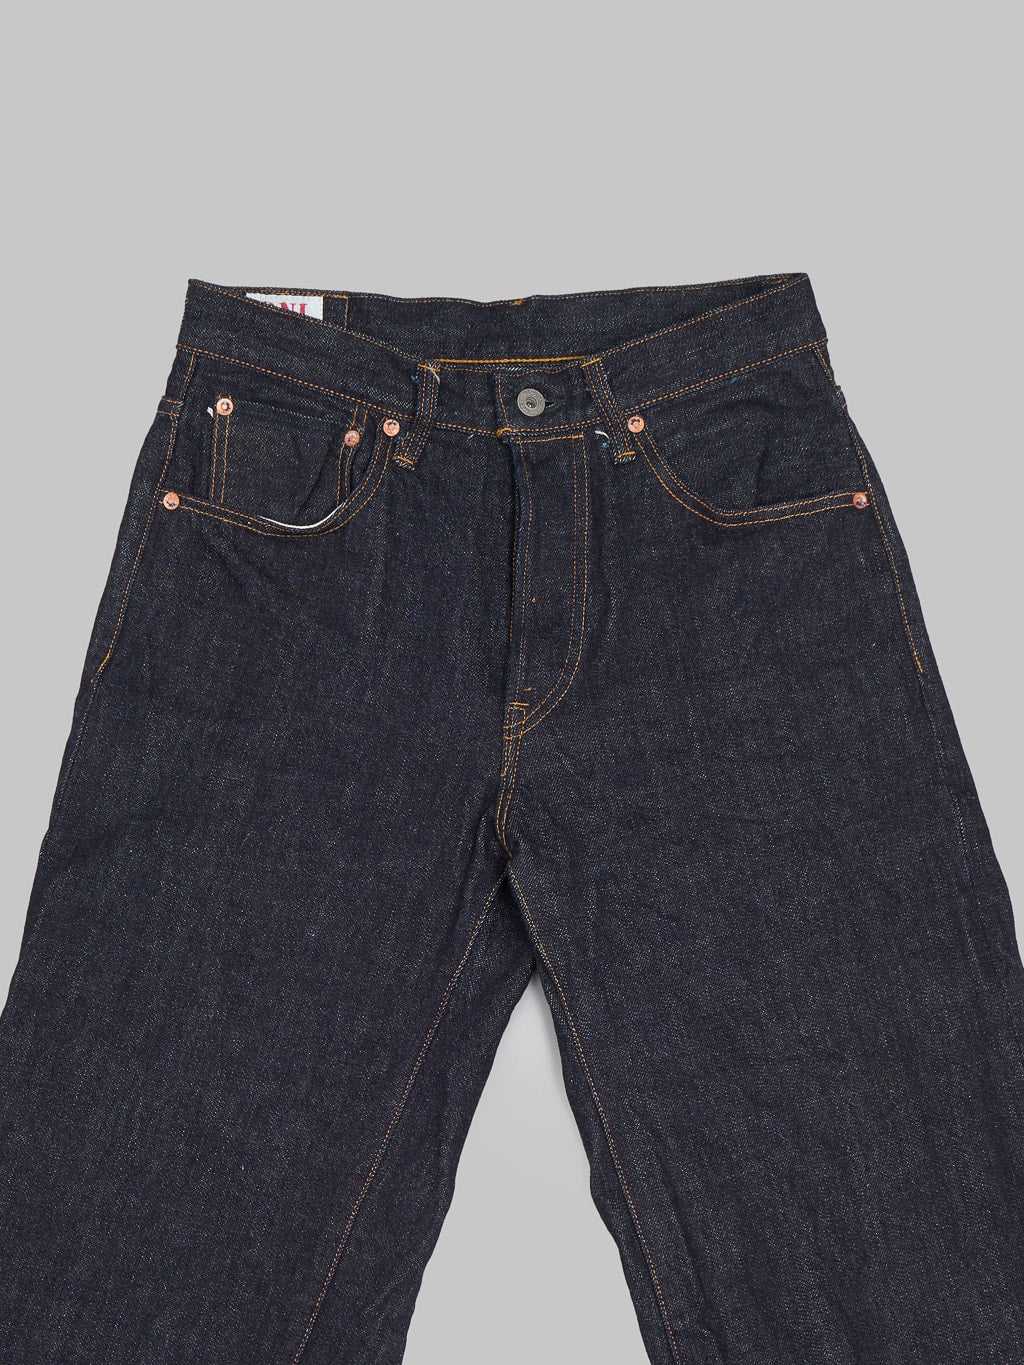 ONI Denim 222 Low Tension Super Wide Straight Jeans high waist